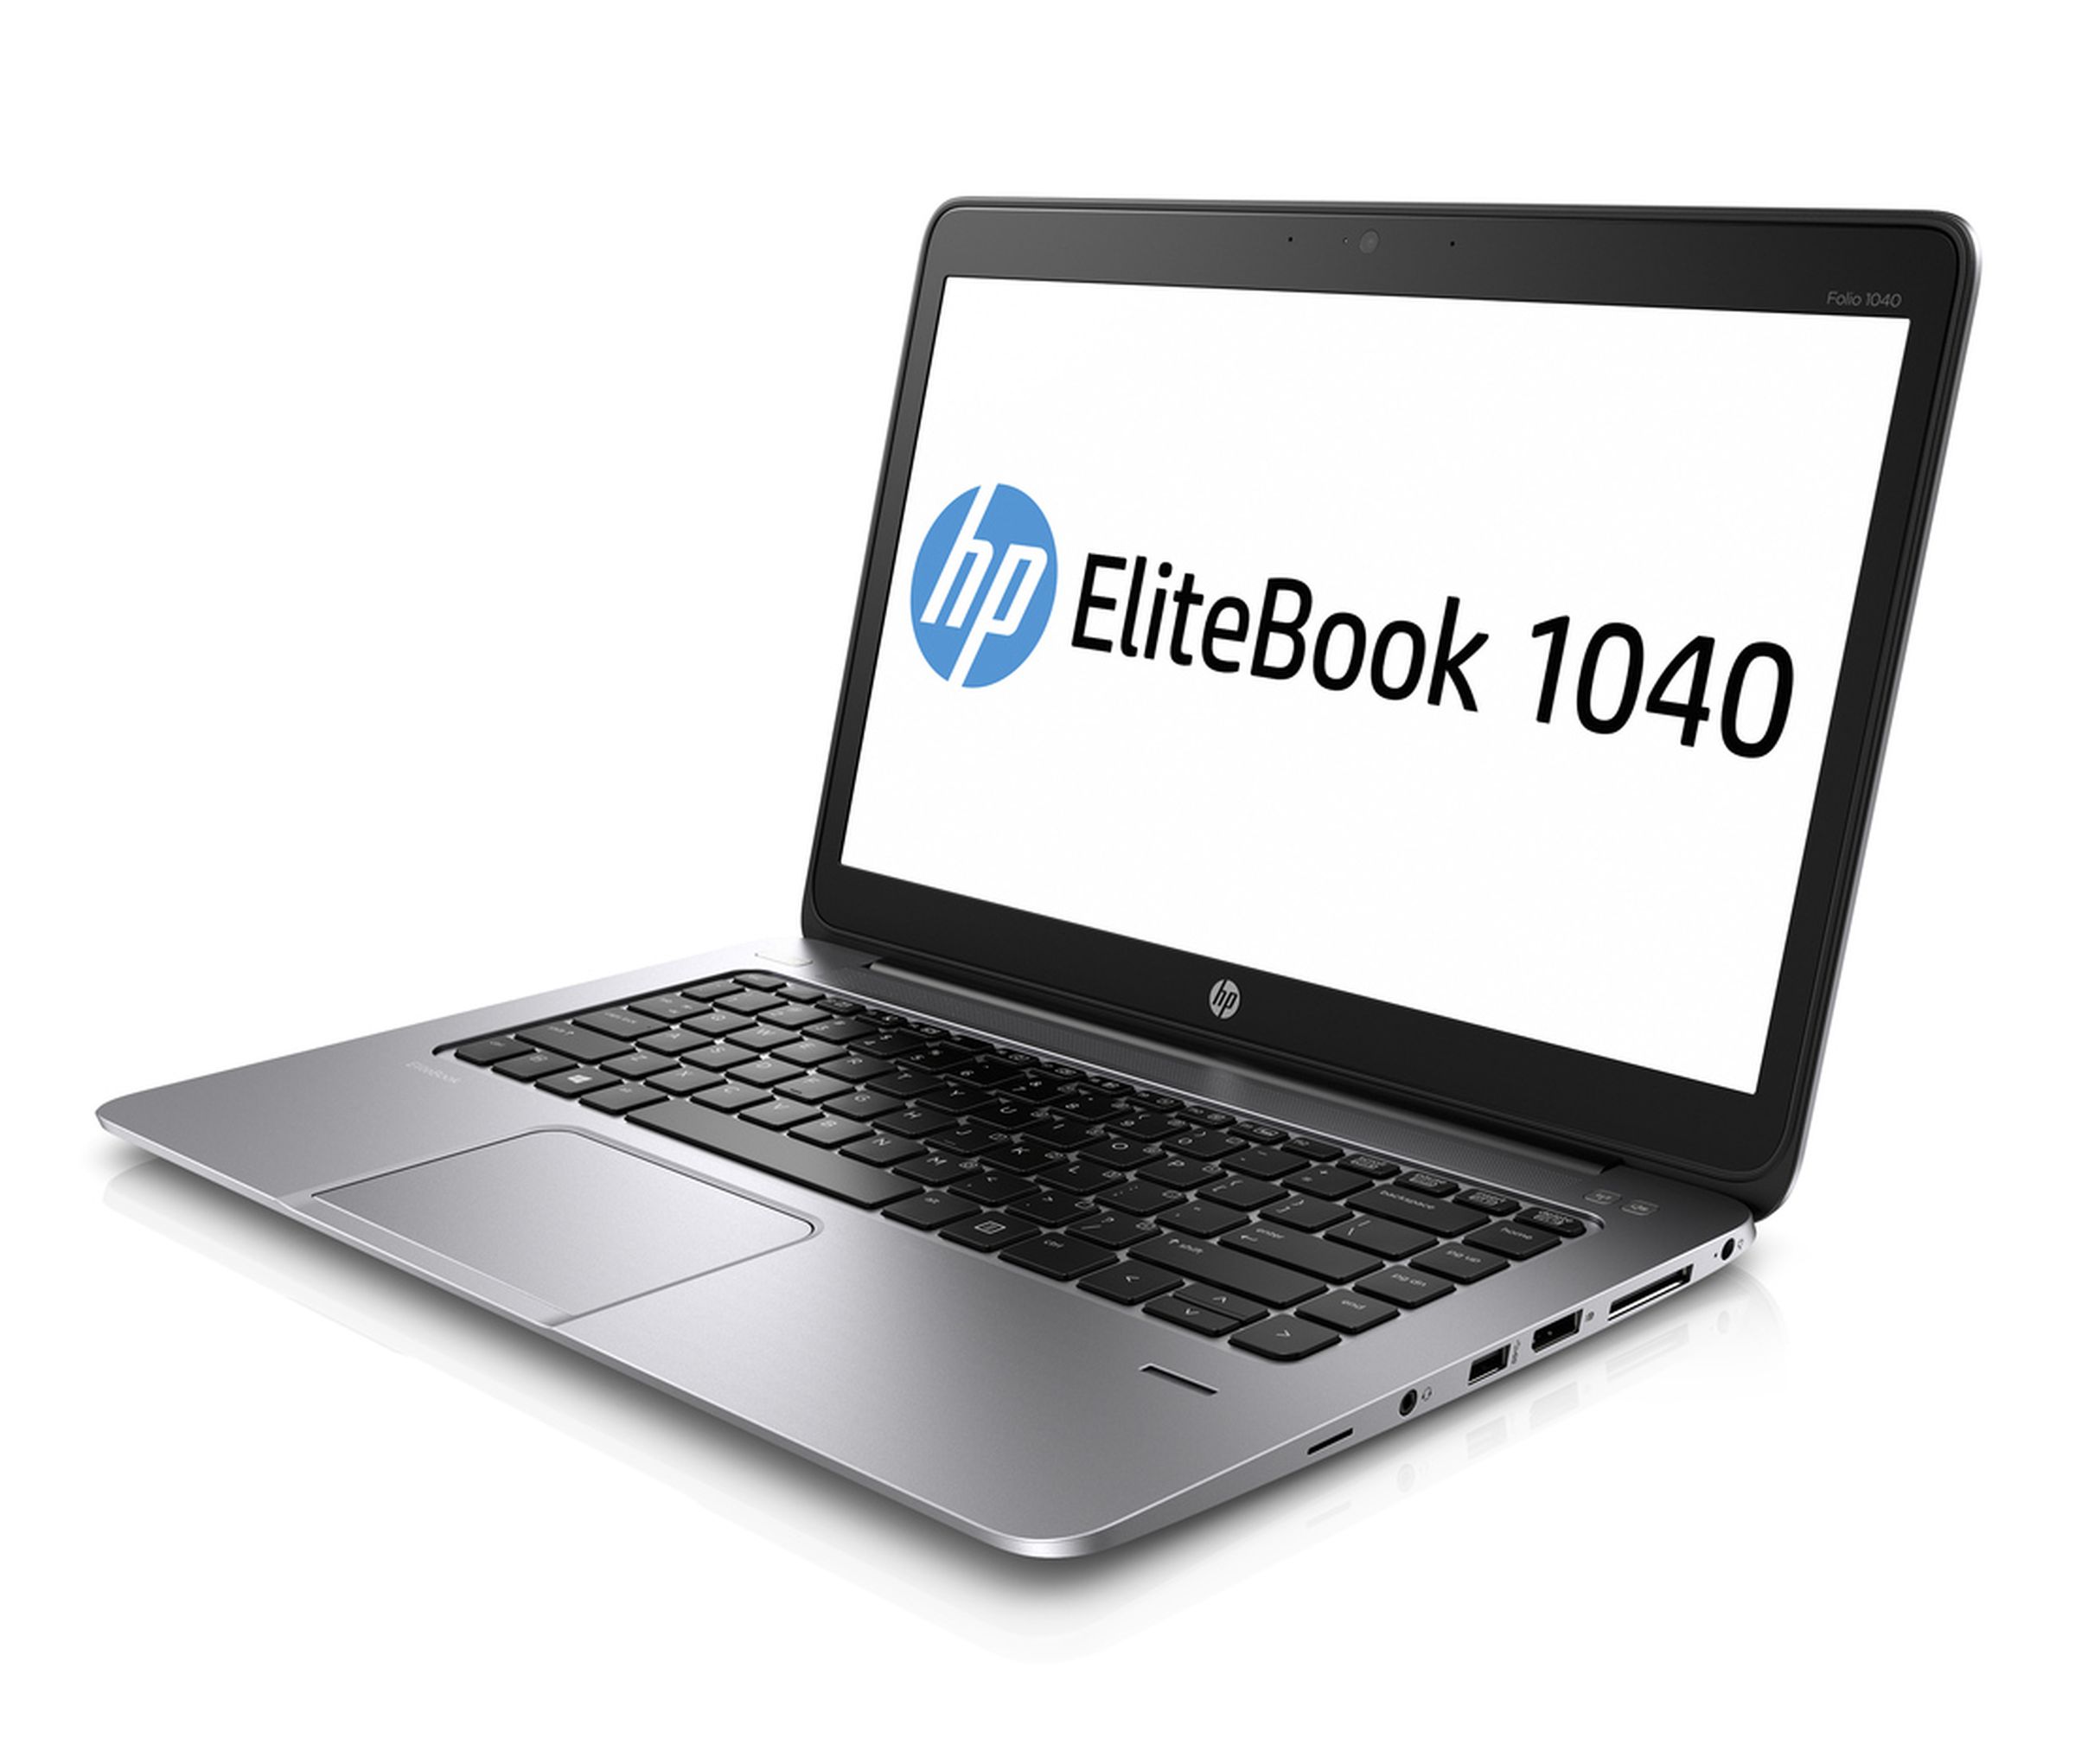 HP Elitebook Folio 1040 G1 hands-on pictures